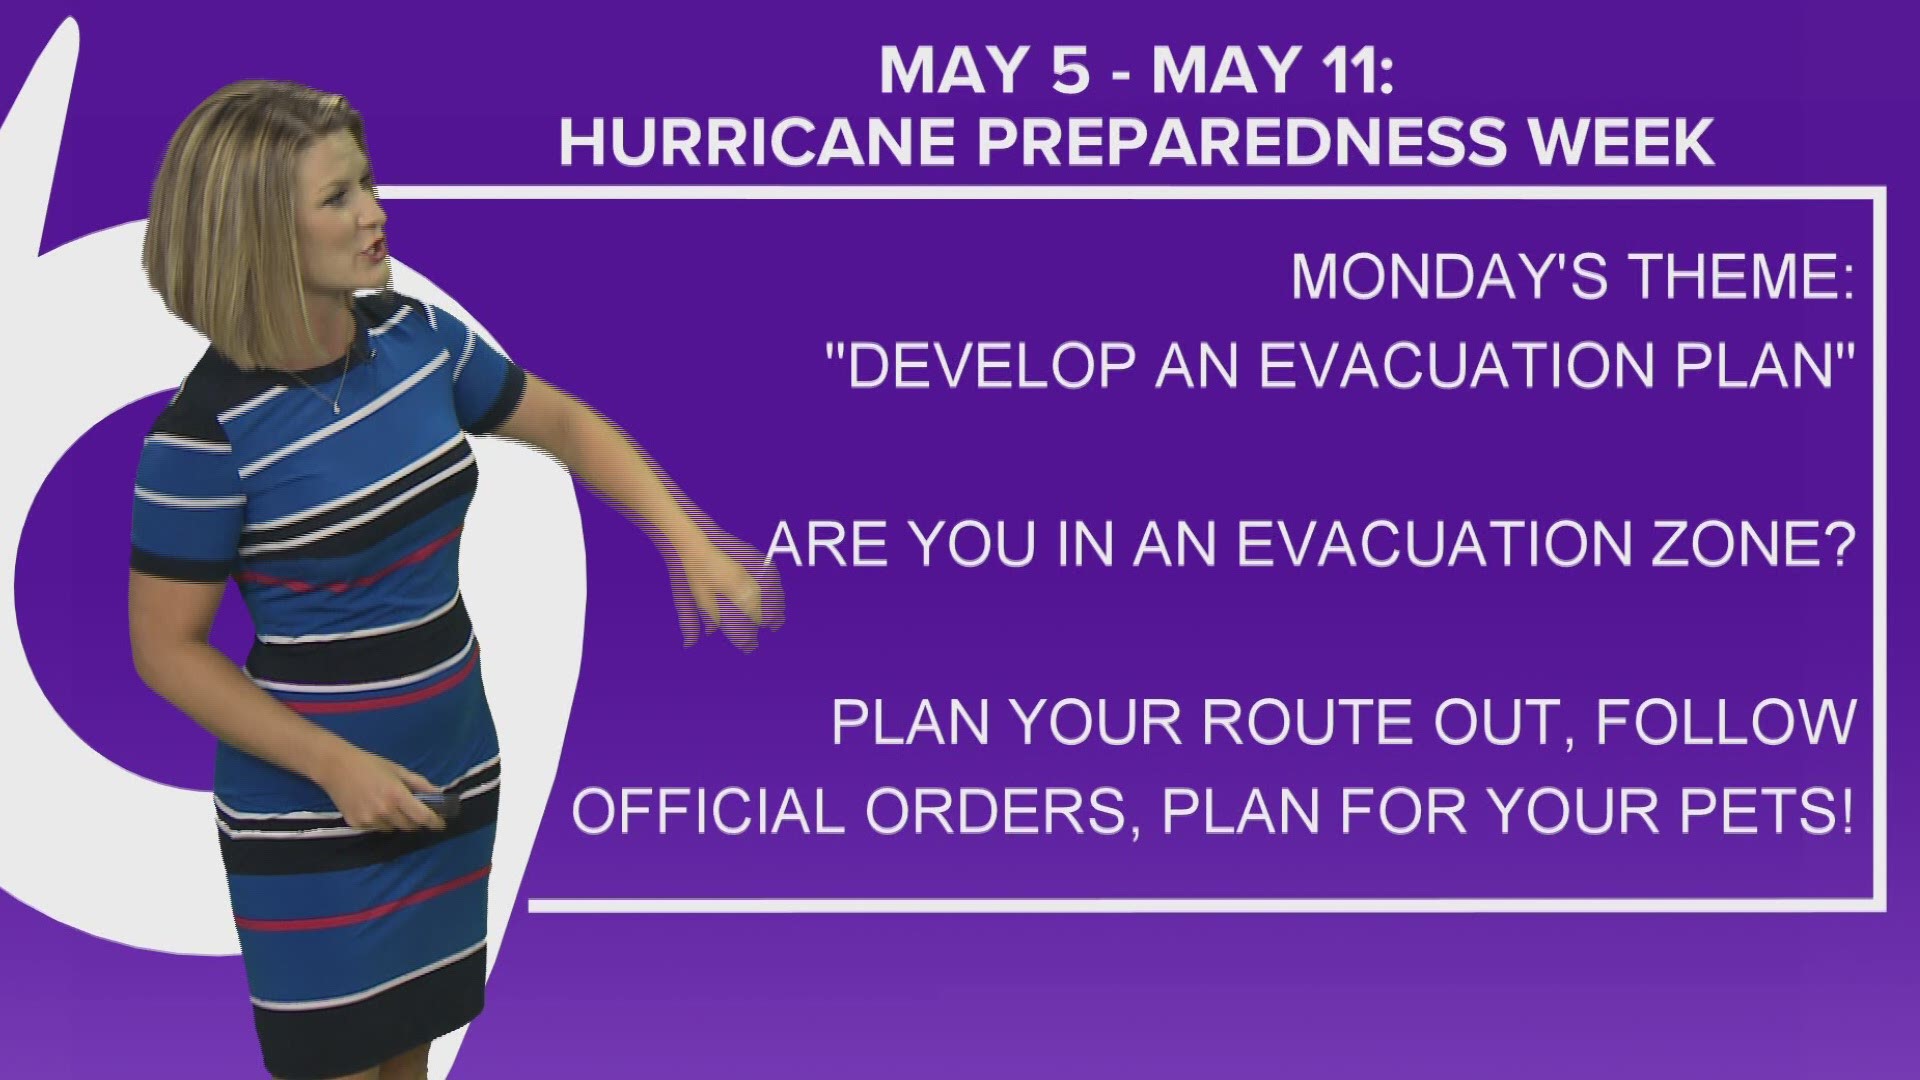 Take some time this week - Hurricane Preparedness Week - to make sure you have a hurricane evacuation plan.